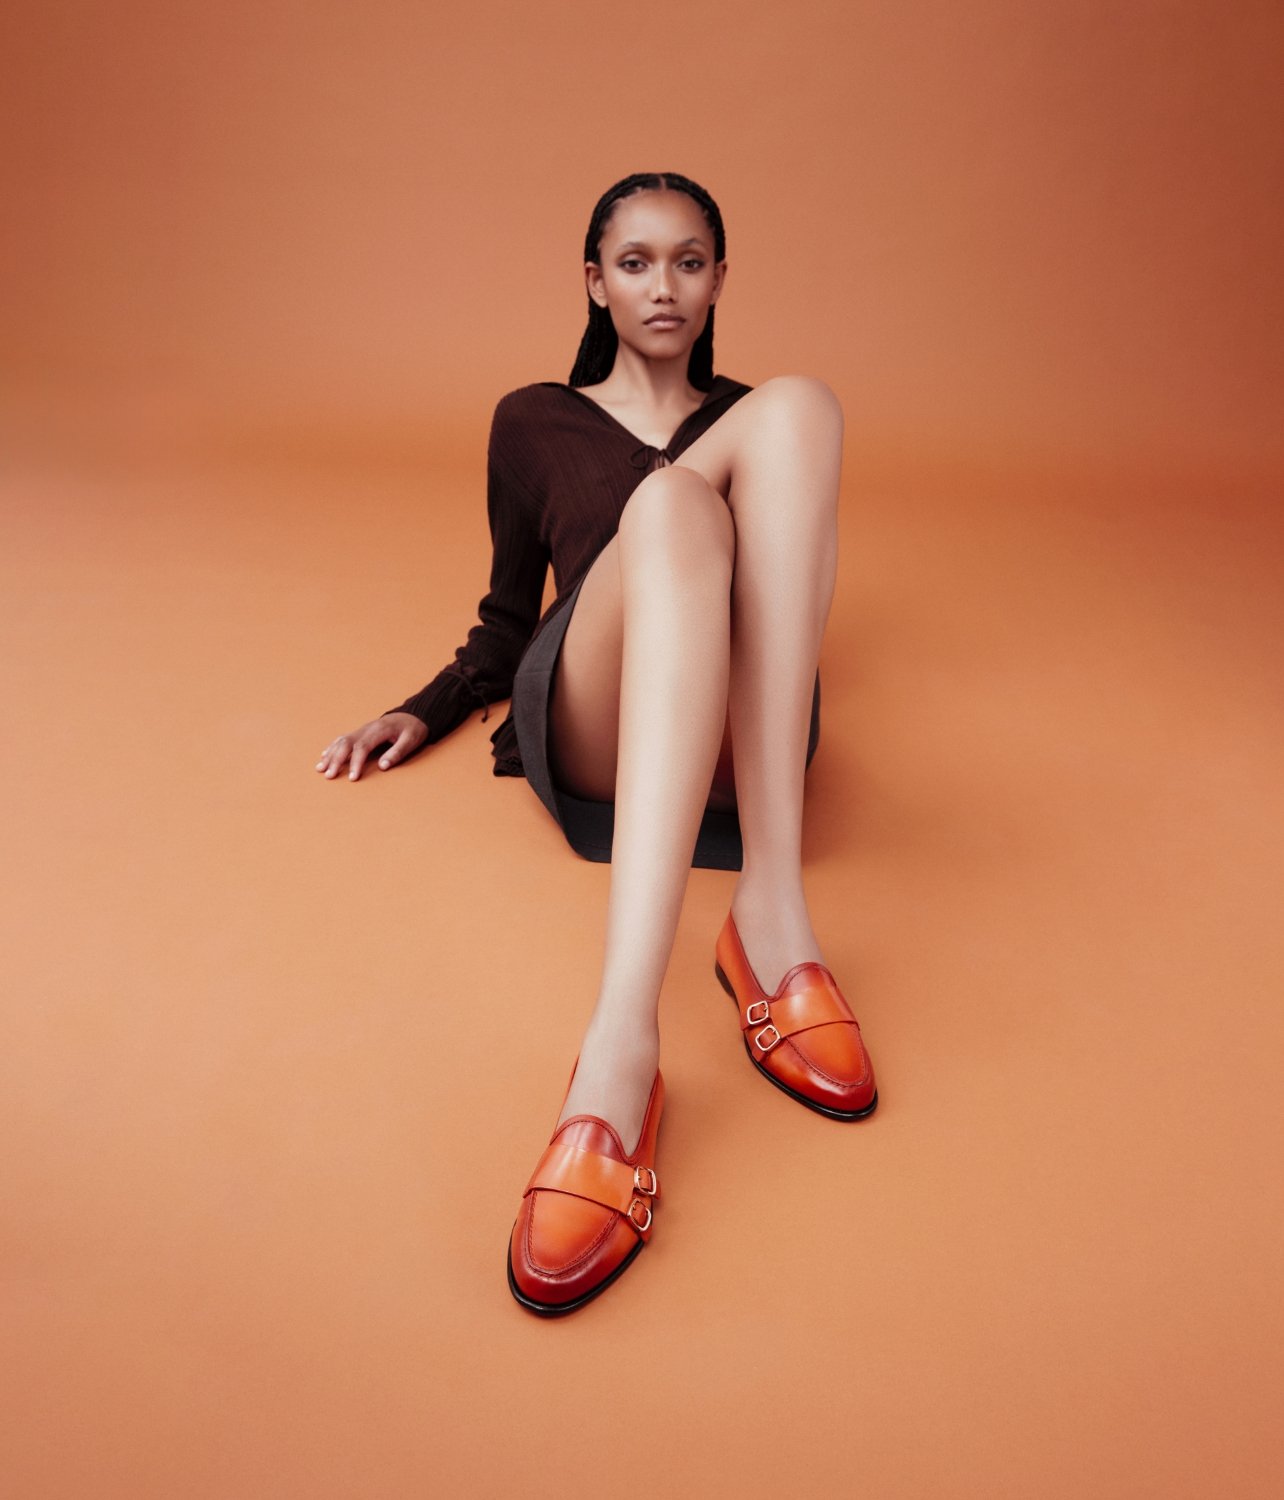 Model for Santoni modeling the new Andrea loafer in orange with gold hardware